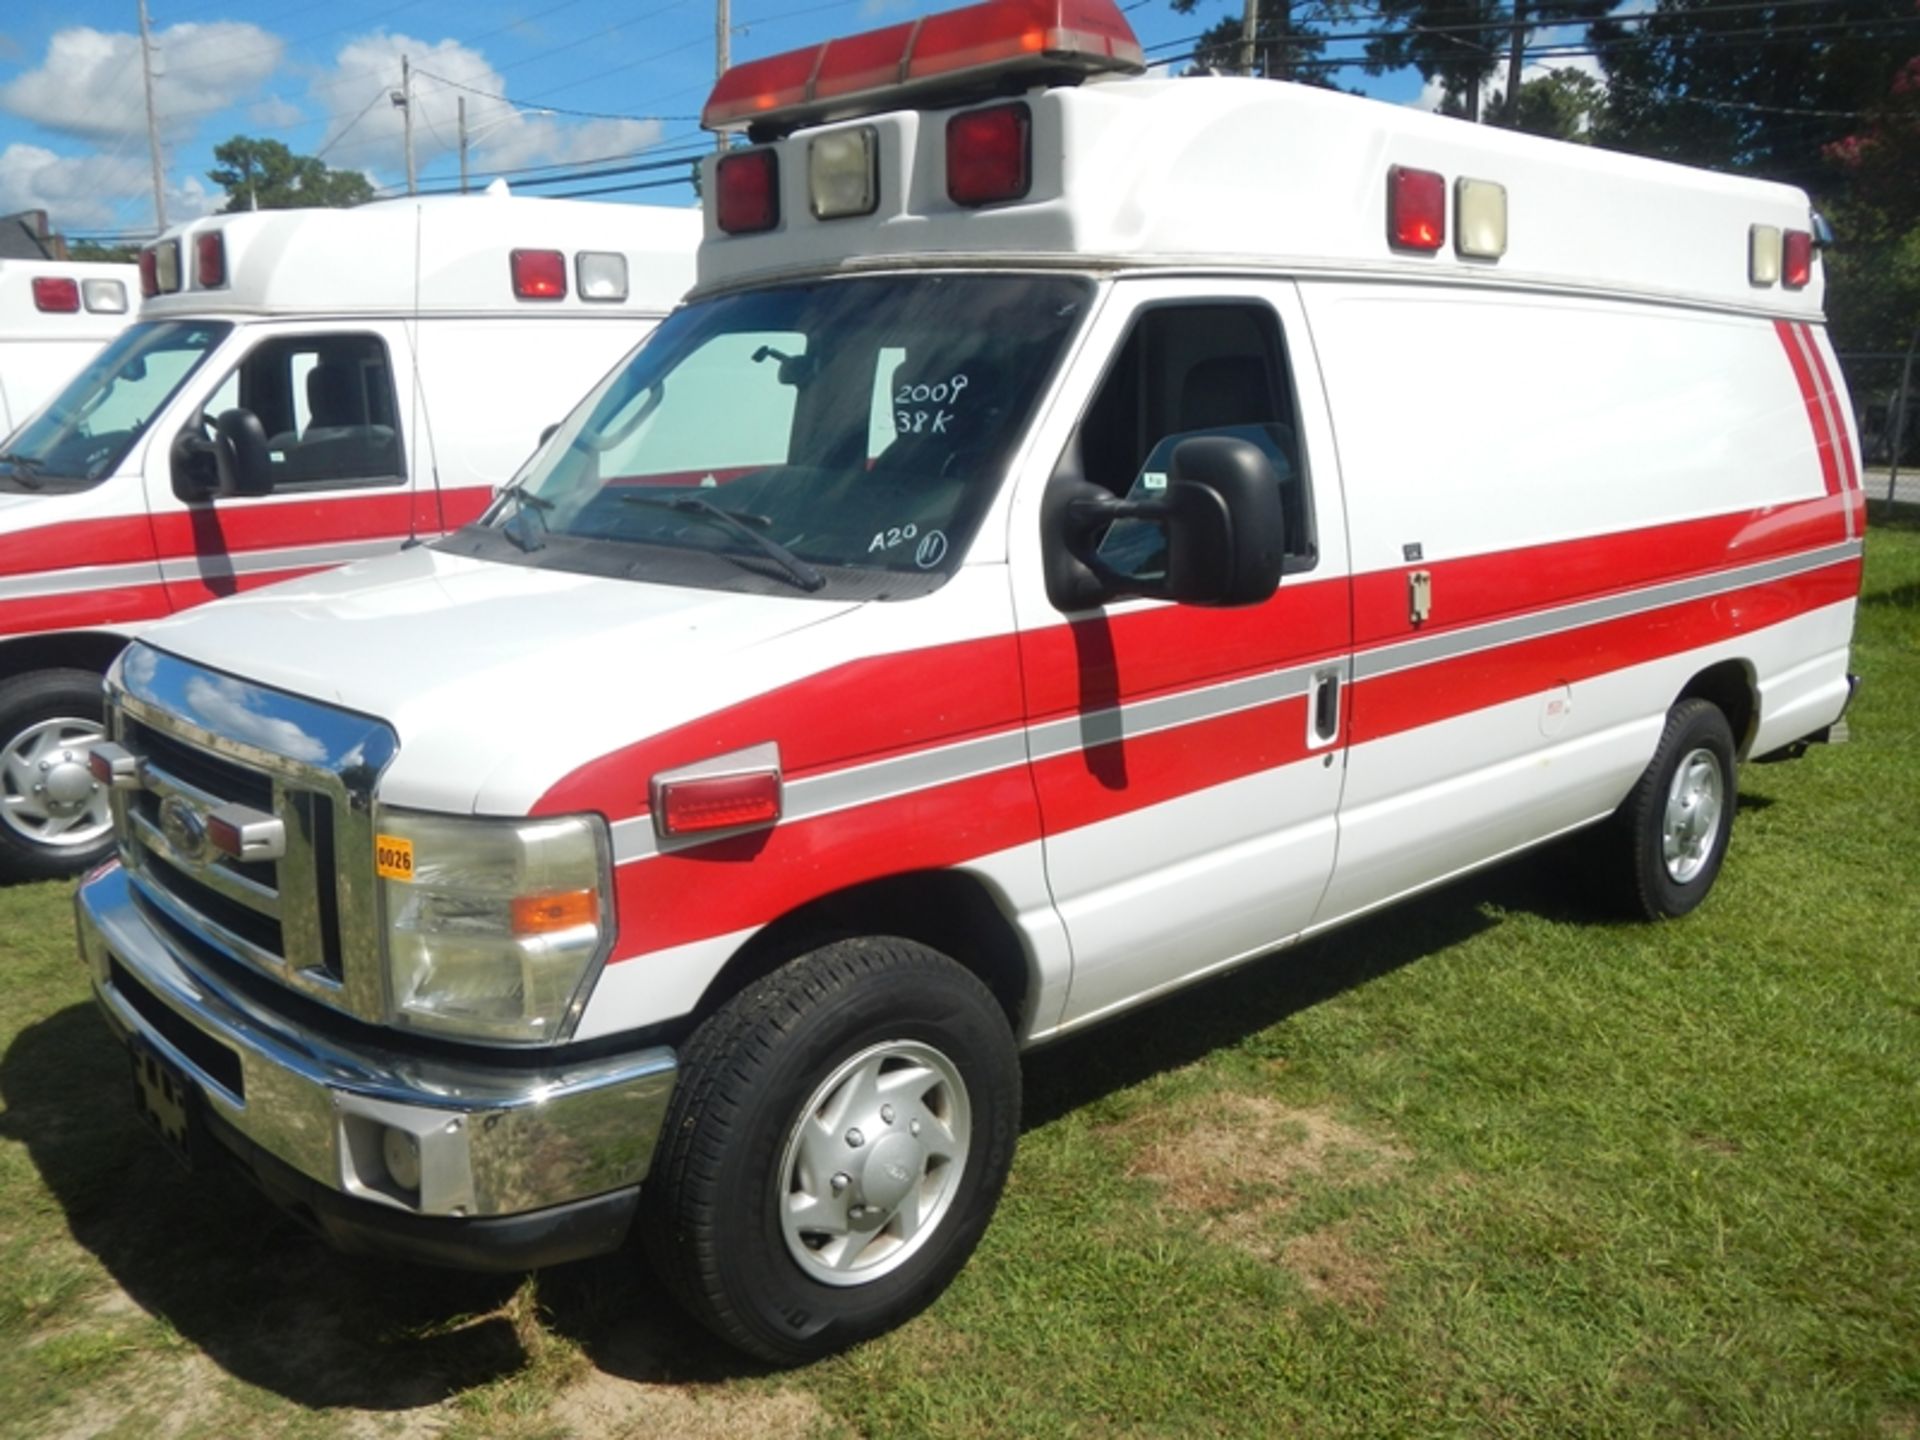 2009 FORD E-350 Super Duty Type II Ambulance, diesel - 338,126 miles - VIN: 1FDSS34P29DA58785